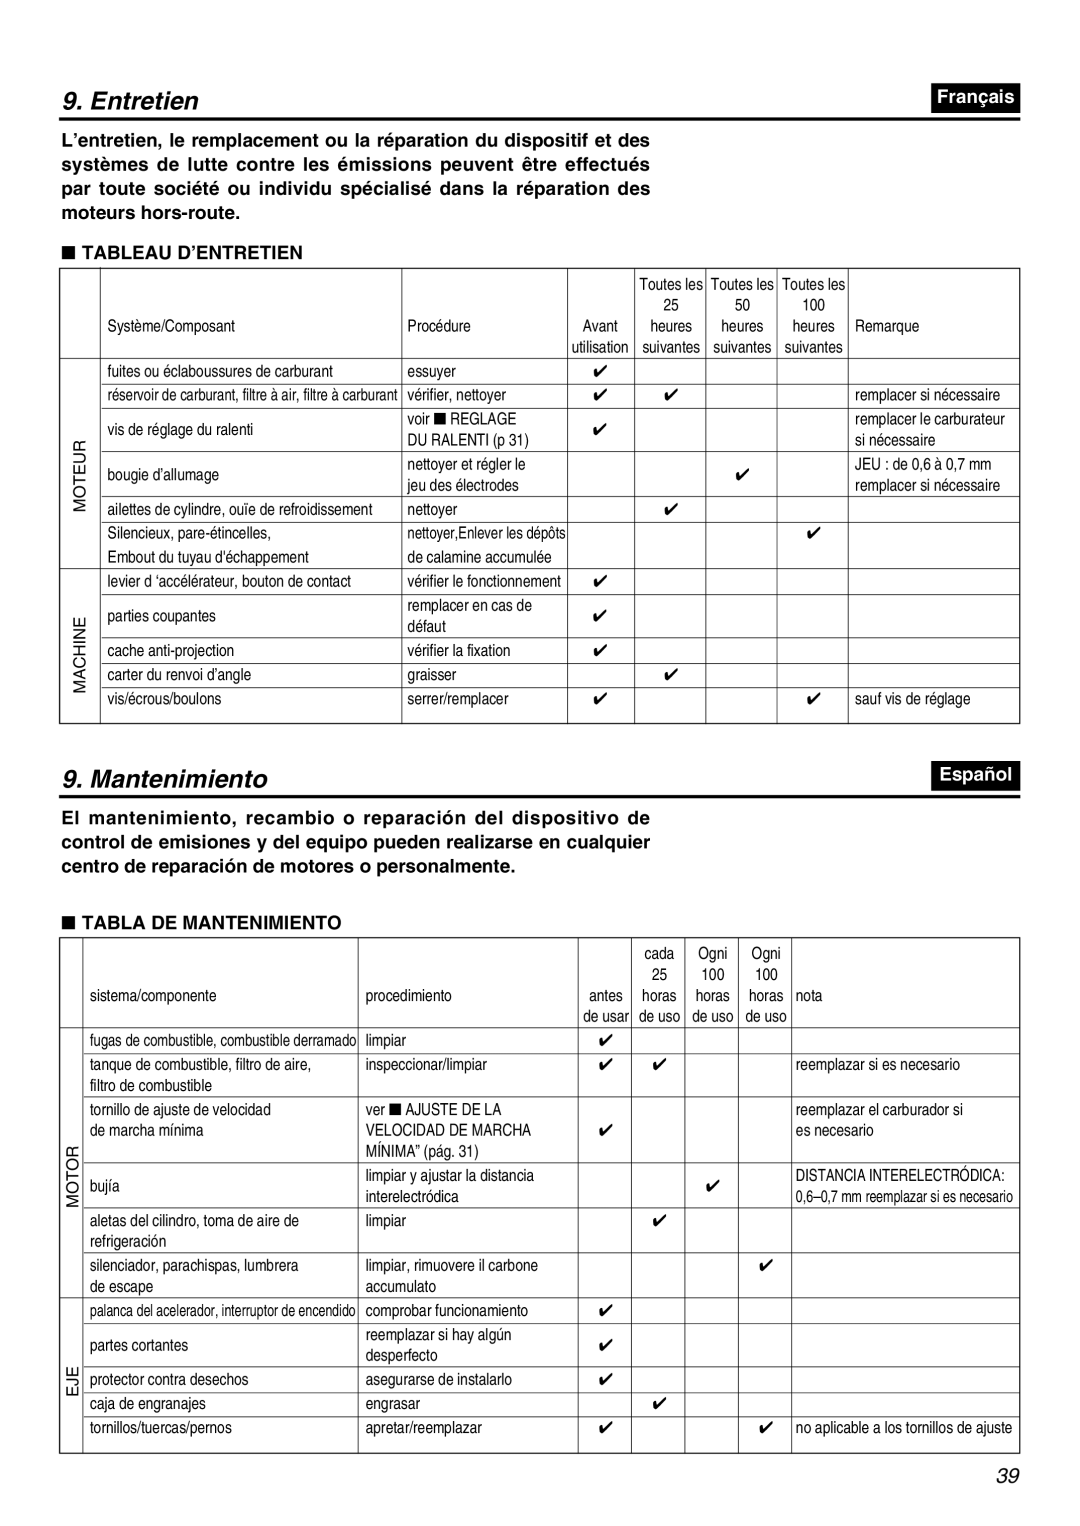 RedMax SGCZ2401S-CA manual Entretien, Tableau D’ENTRETIEN, Tabla DE Mantenimiento 